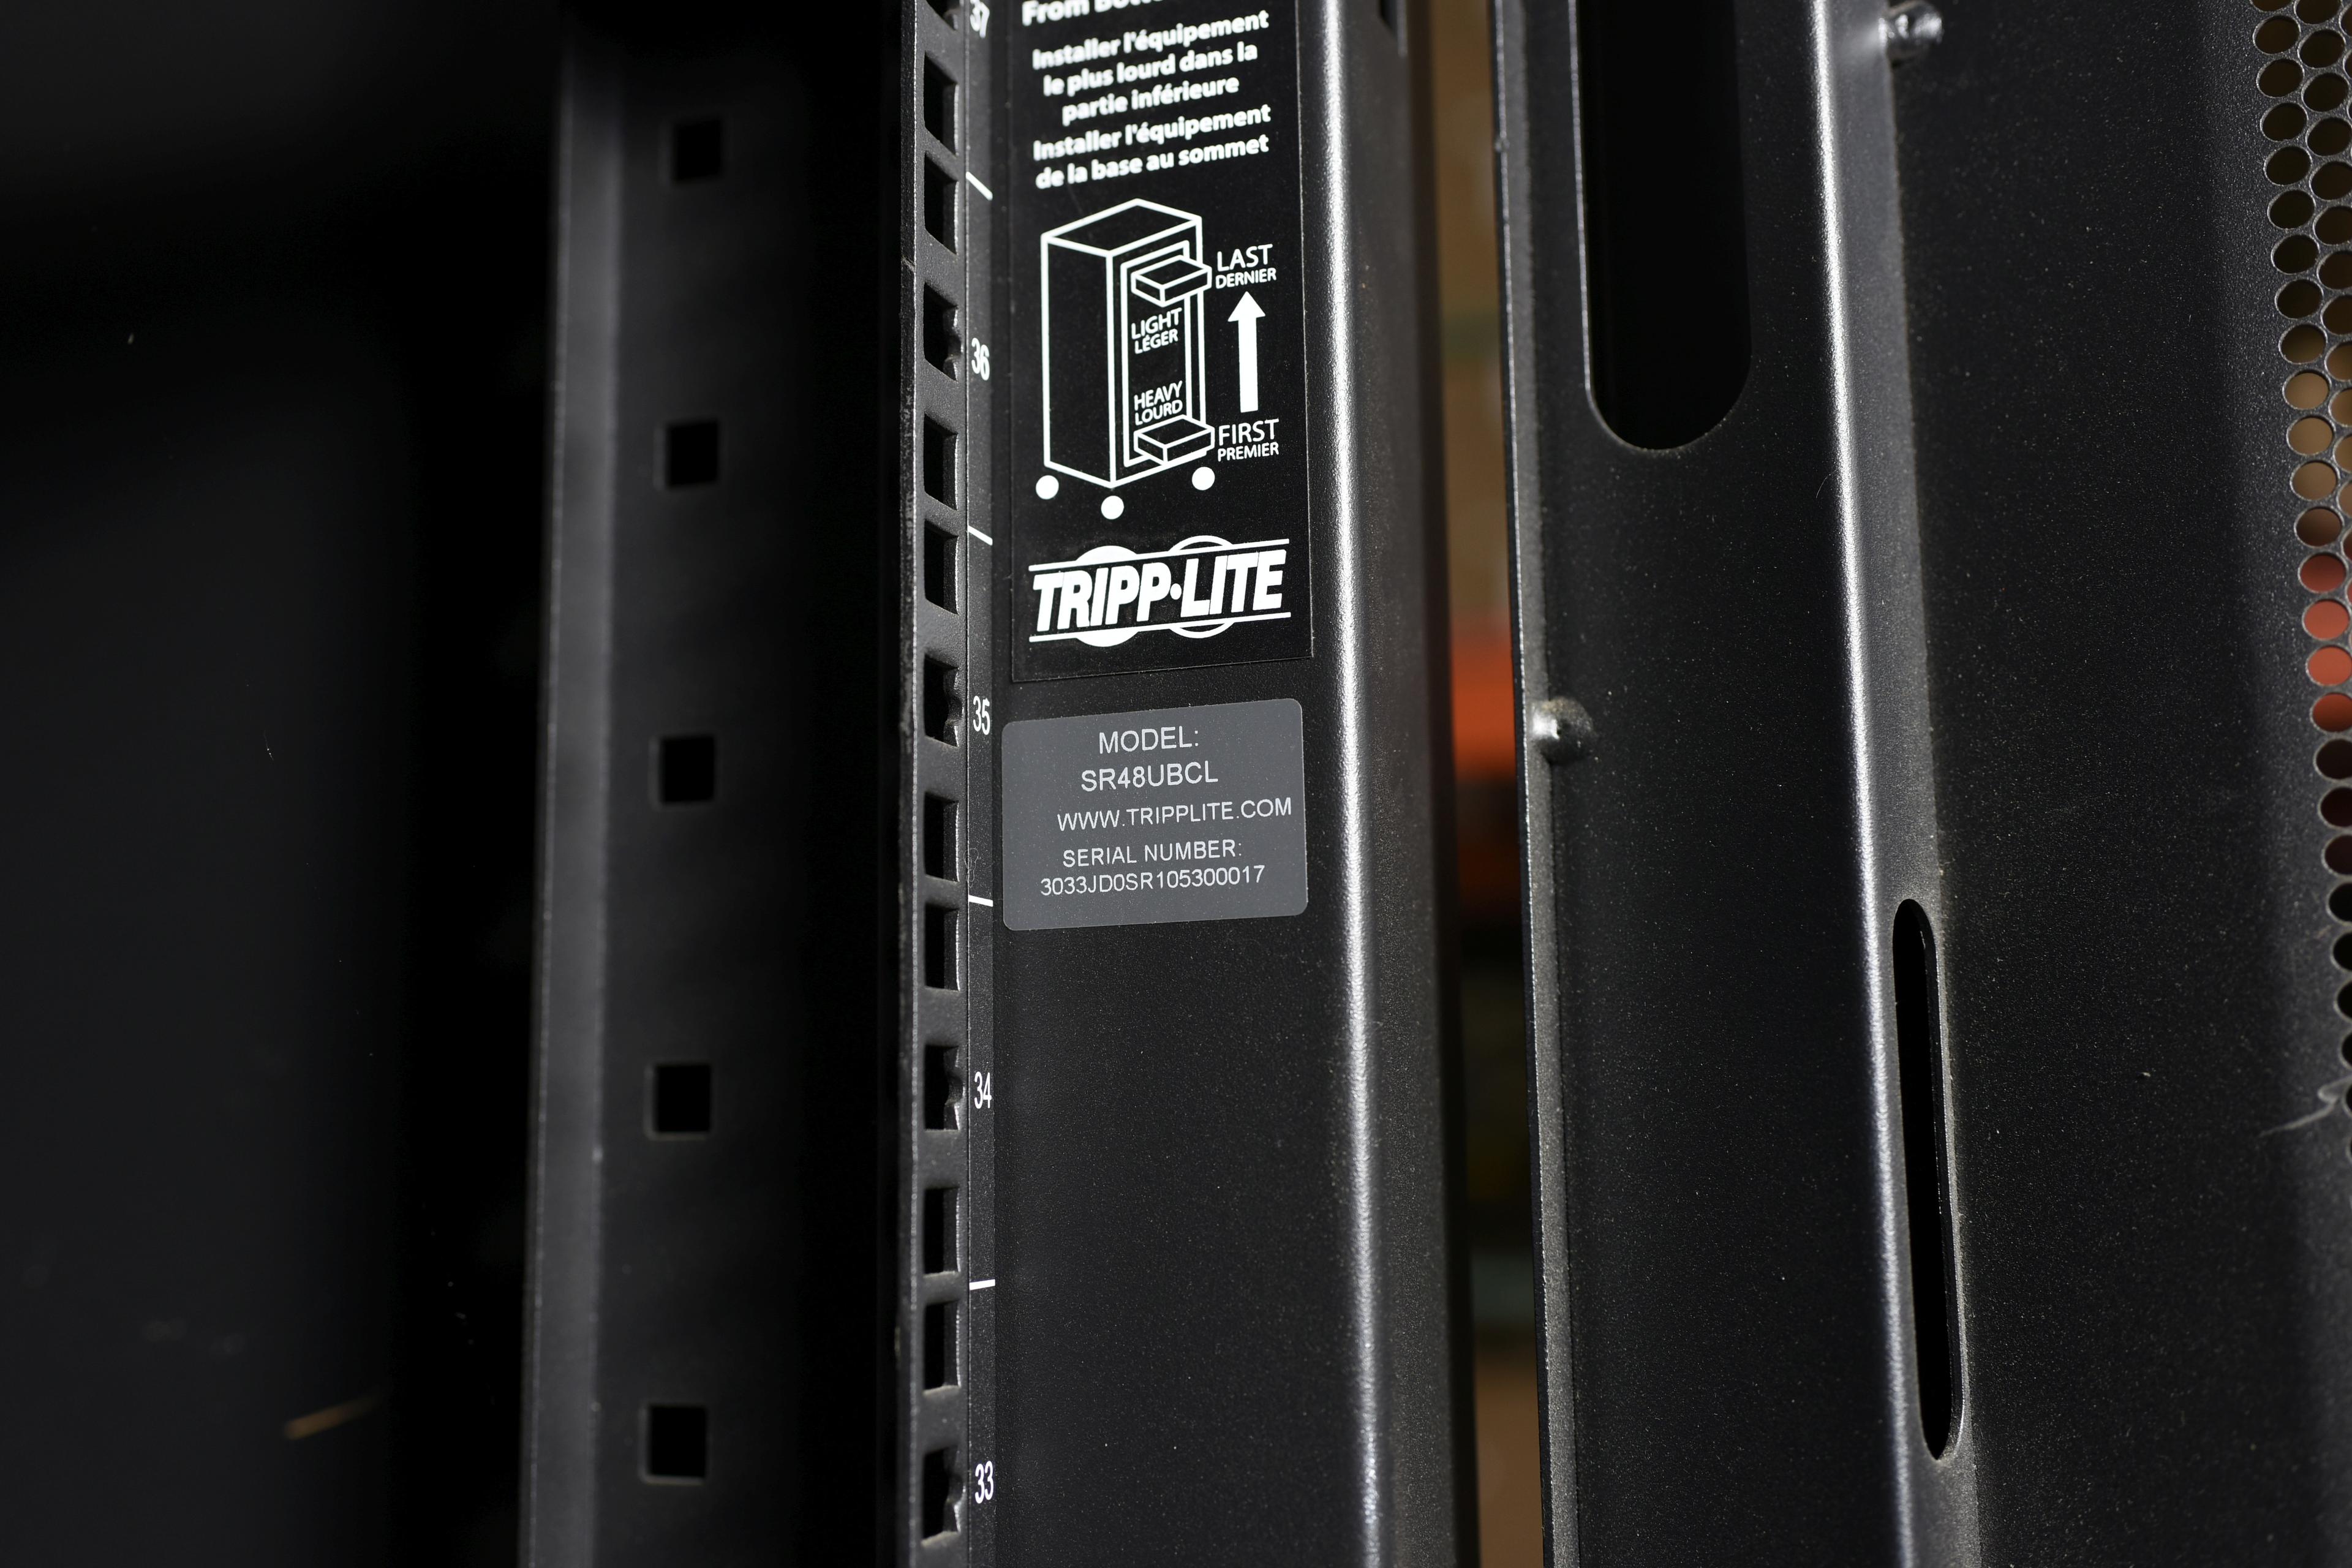 Tripp-Lite Smart Rack Enclosure 48 Slots SR48UBCL Co-Location